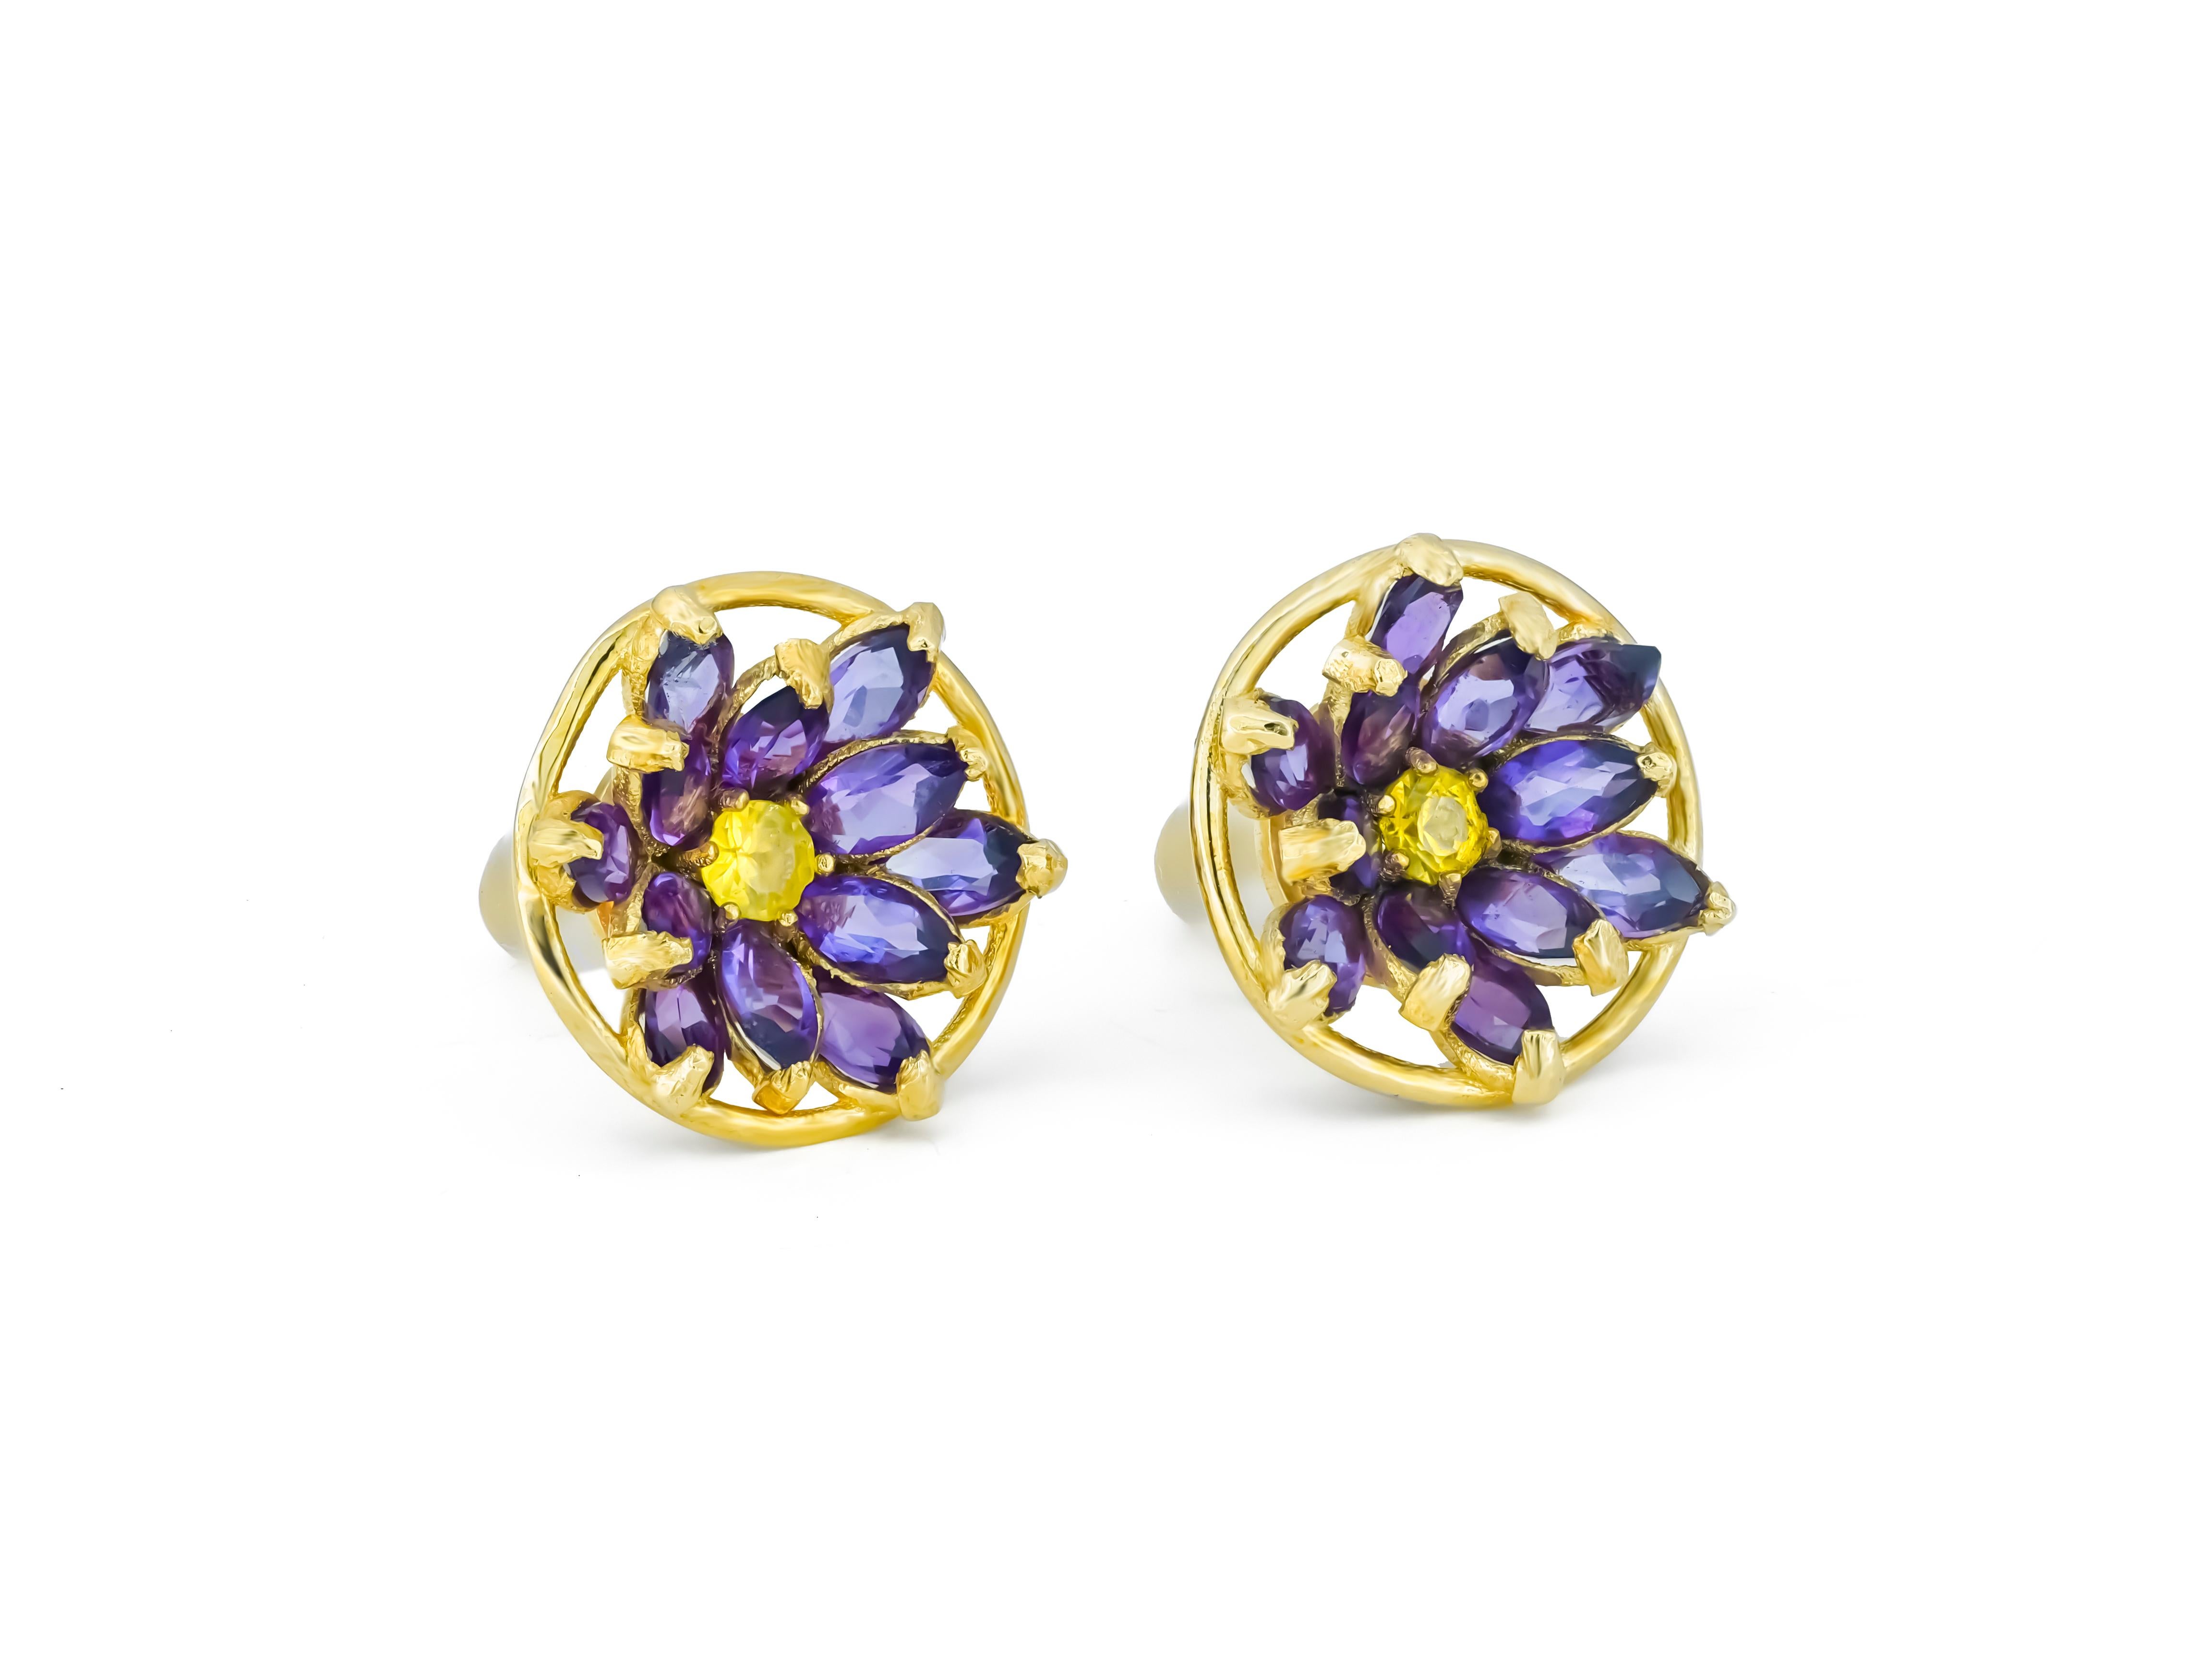 Lotus Flower Earrings Studs in 14k Gold, Amethyst and Sapphires Earrings For Sale 8